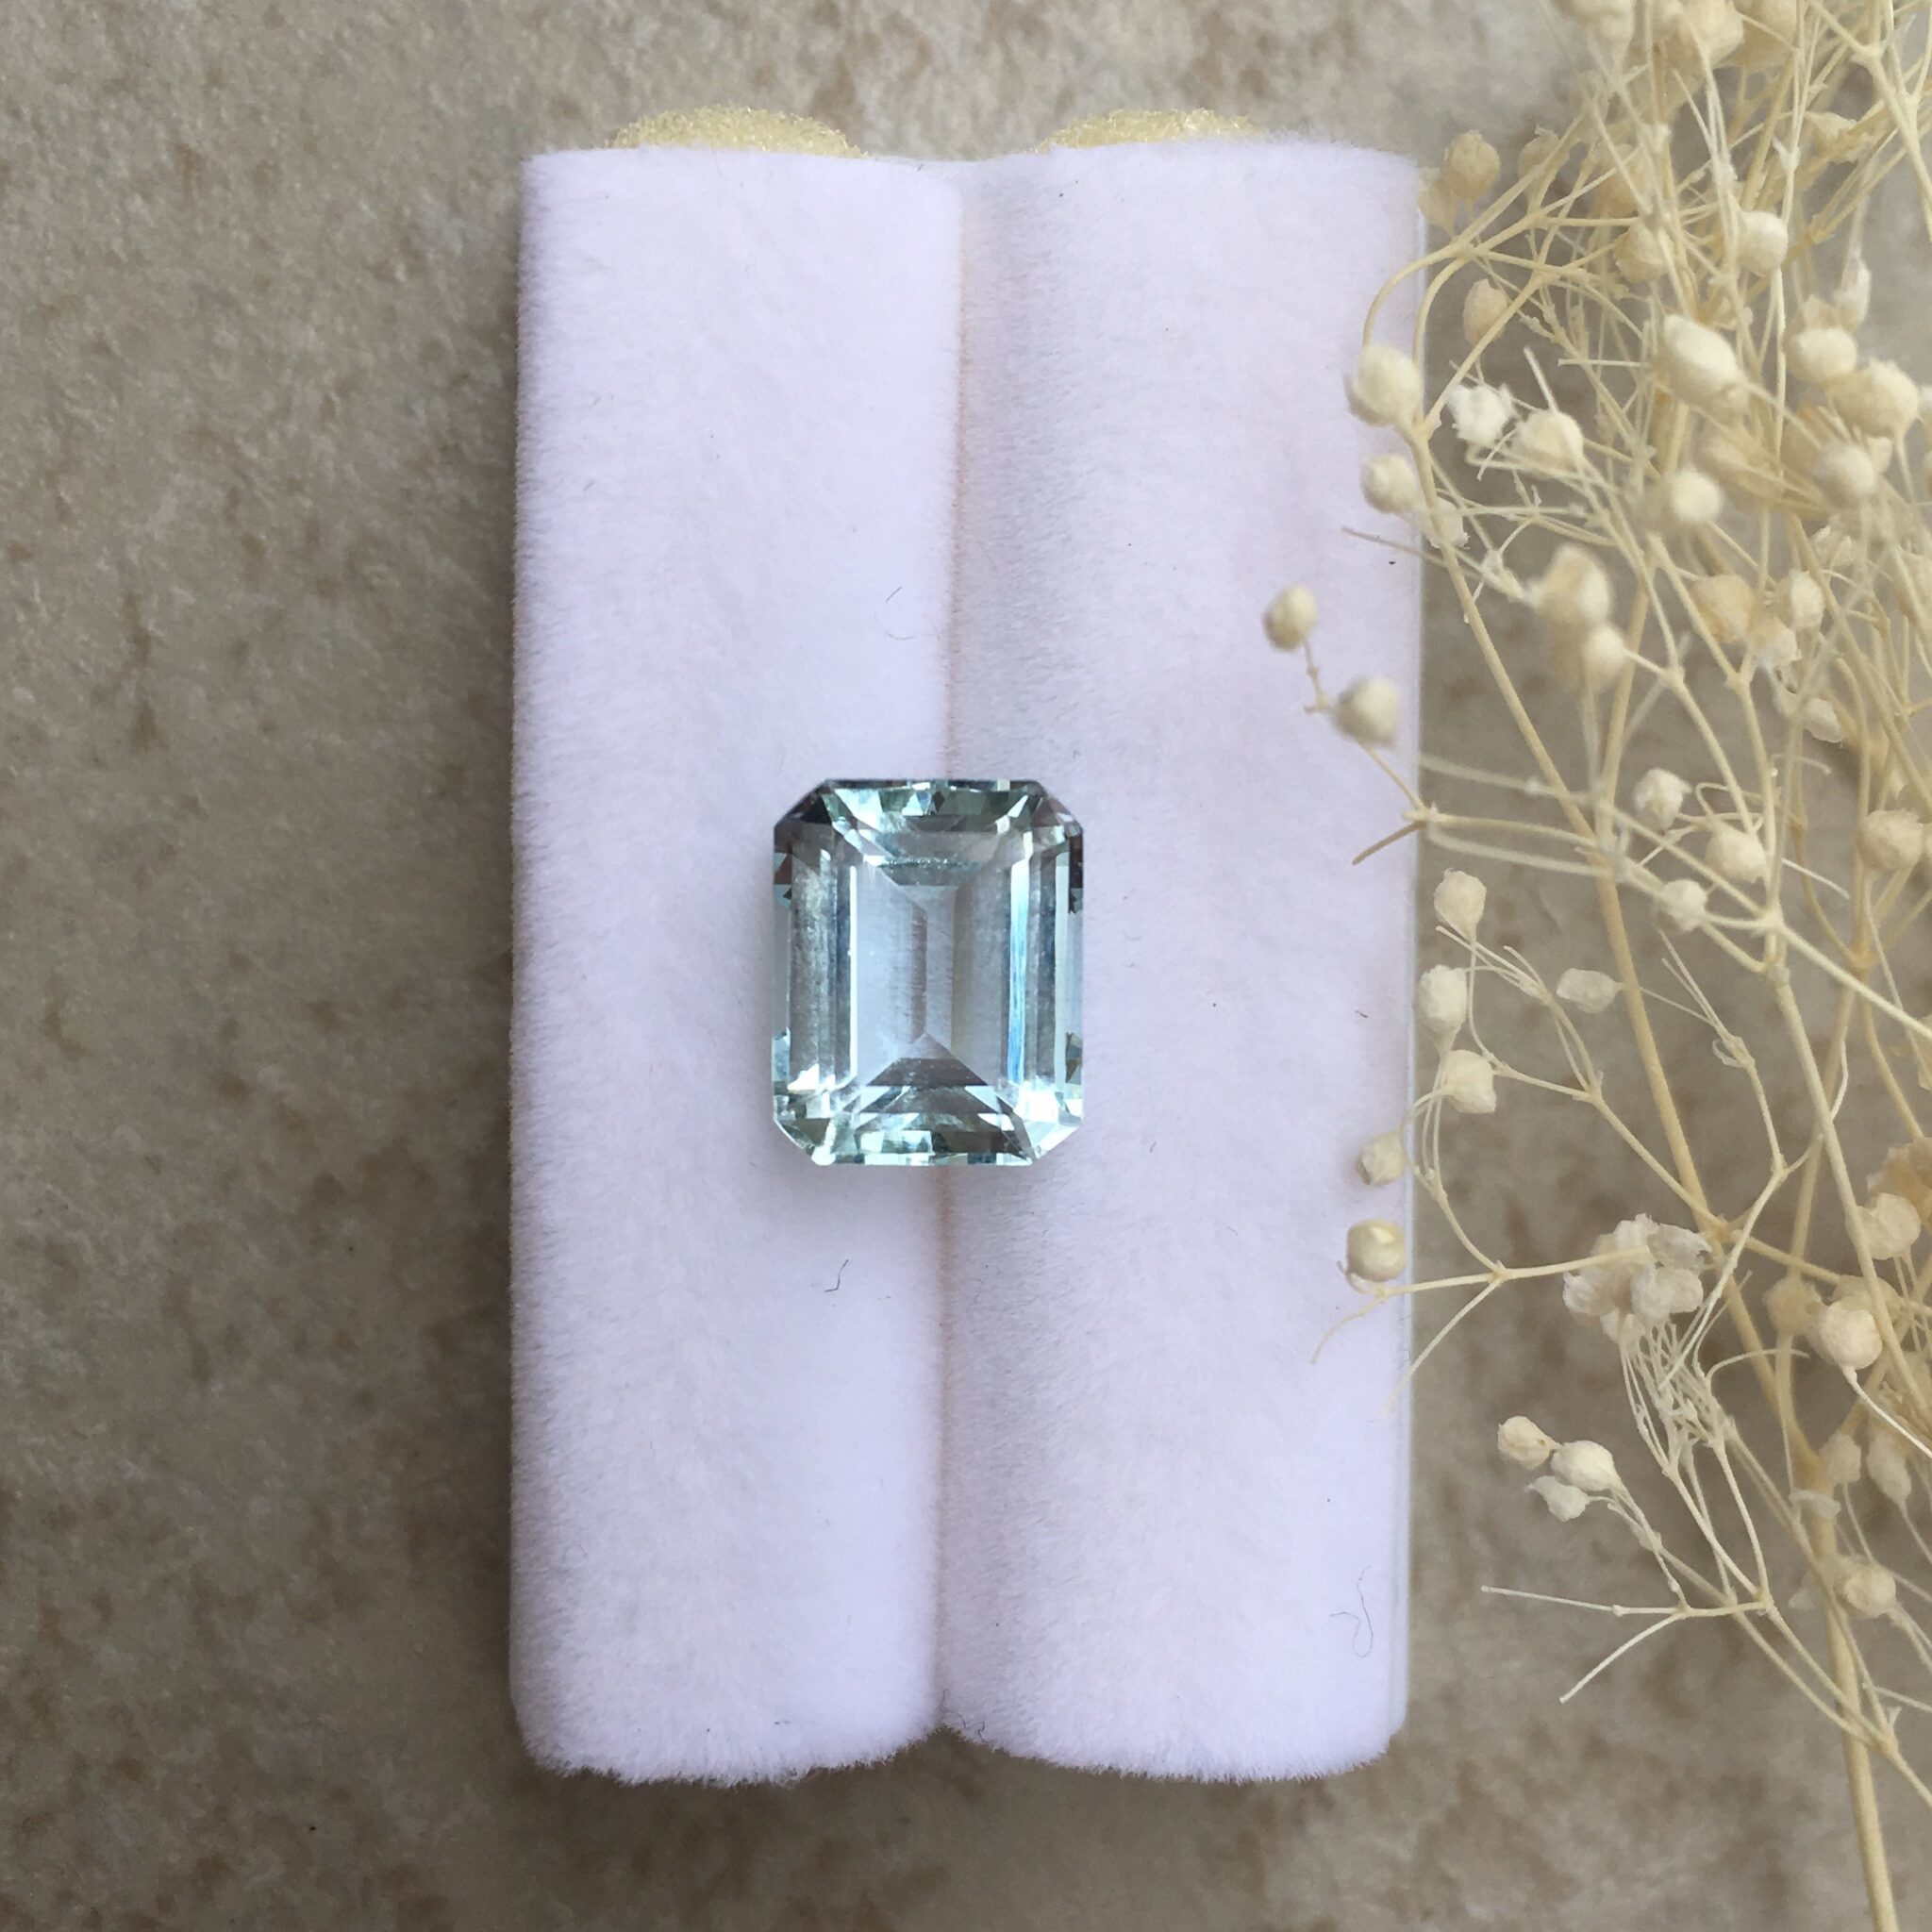 Wholesale Lot of 10x8mm Emerald Cut Natural Aquamarine Loose Calibrated Gemstone 